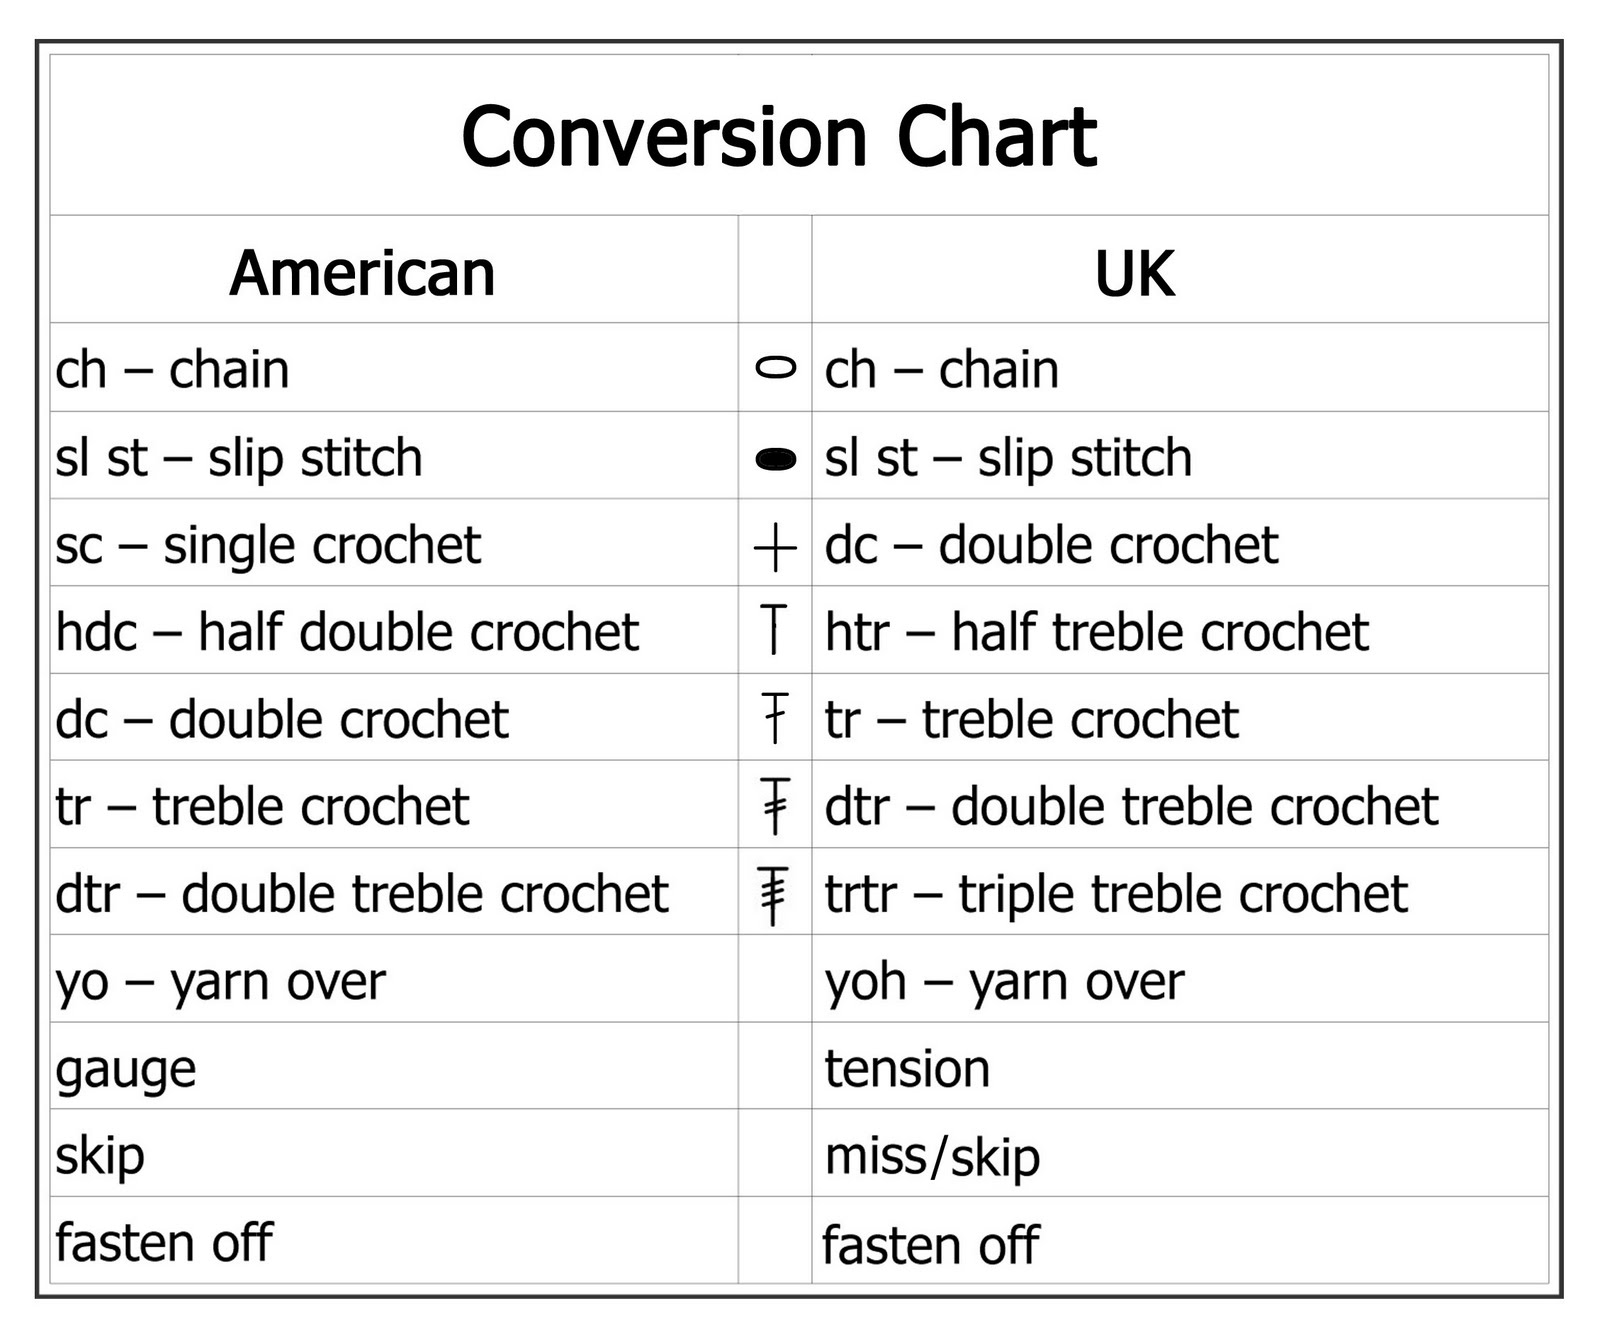 American Standard Measurement Chart